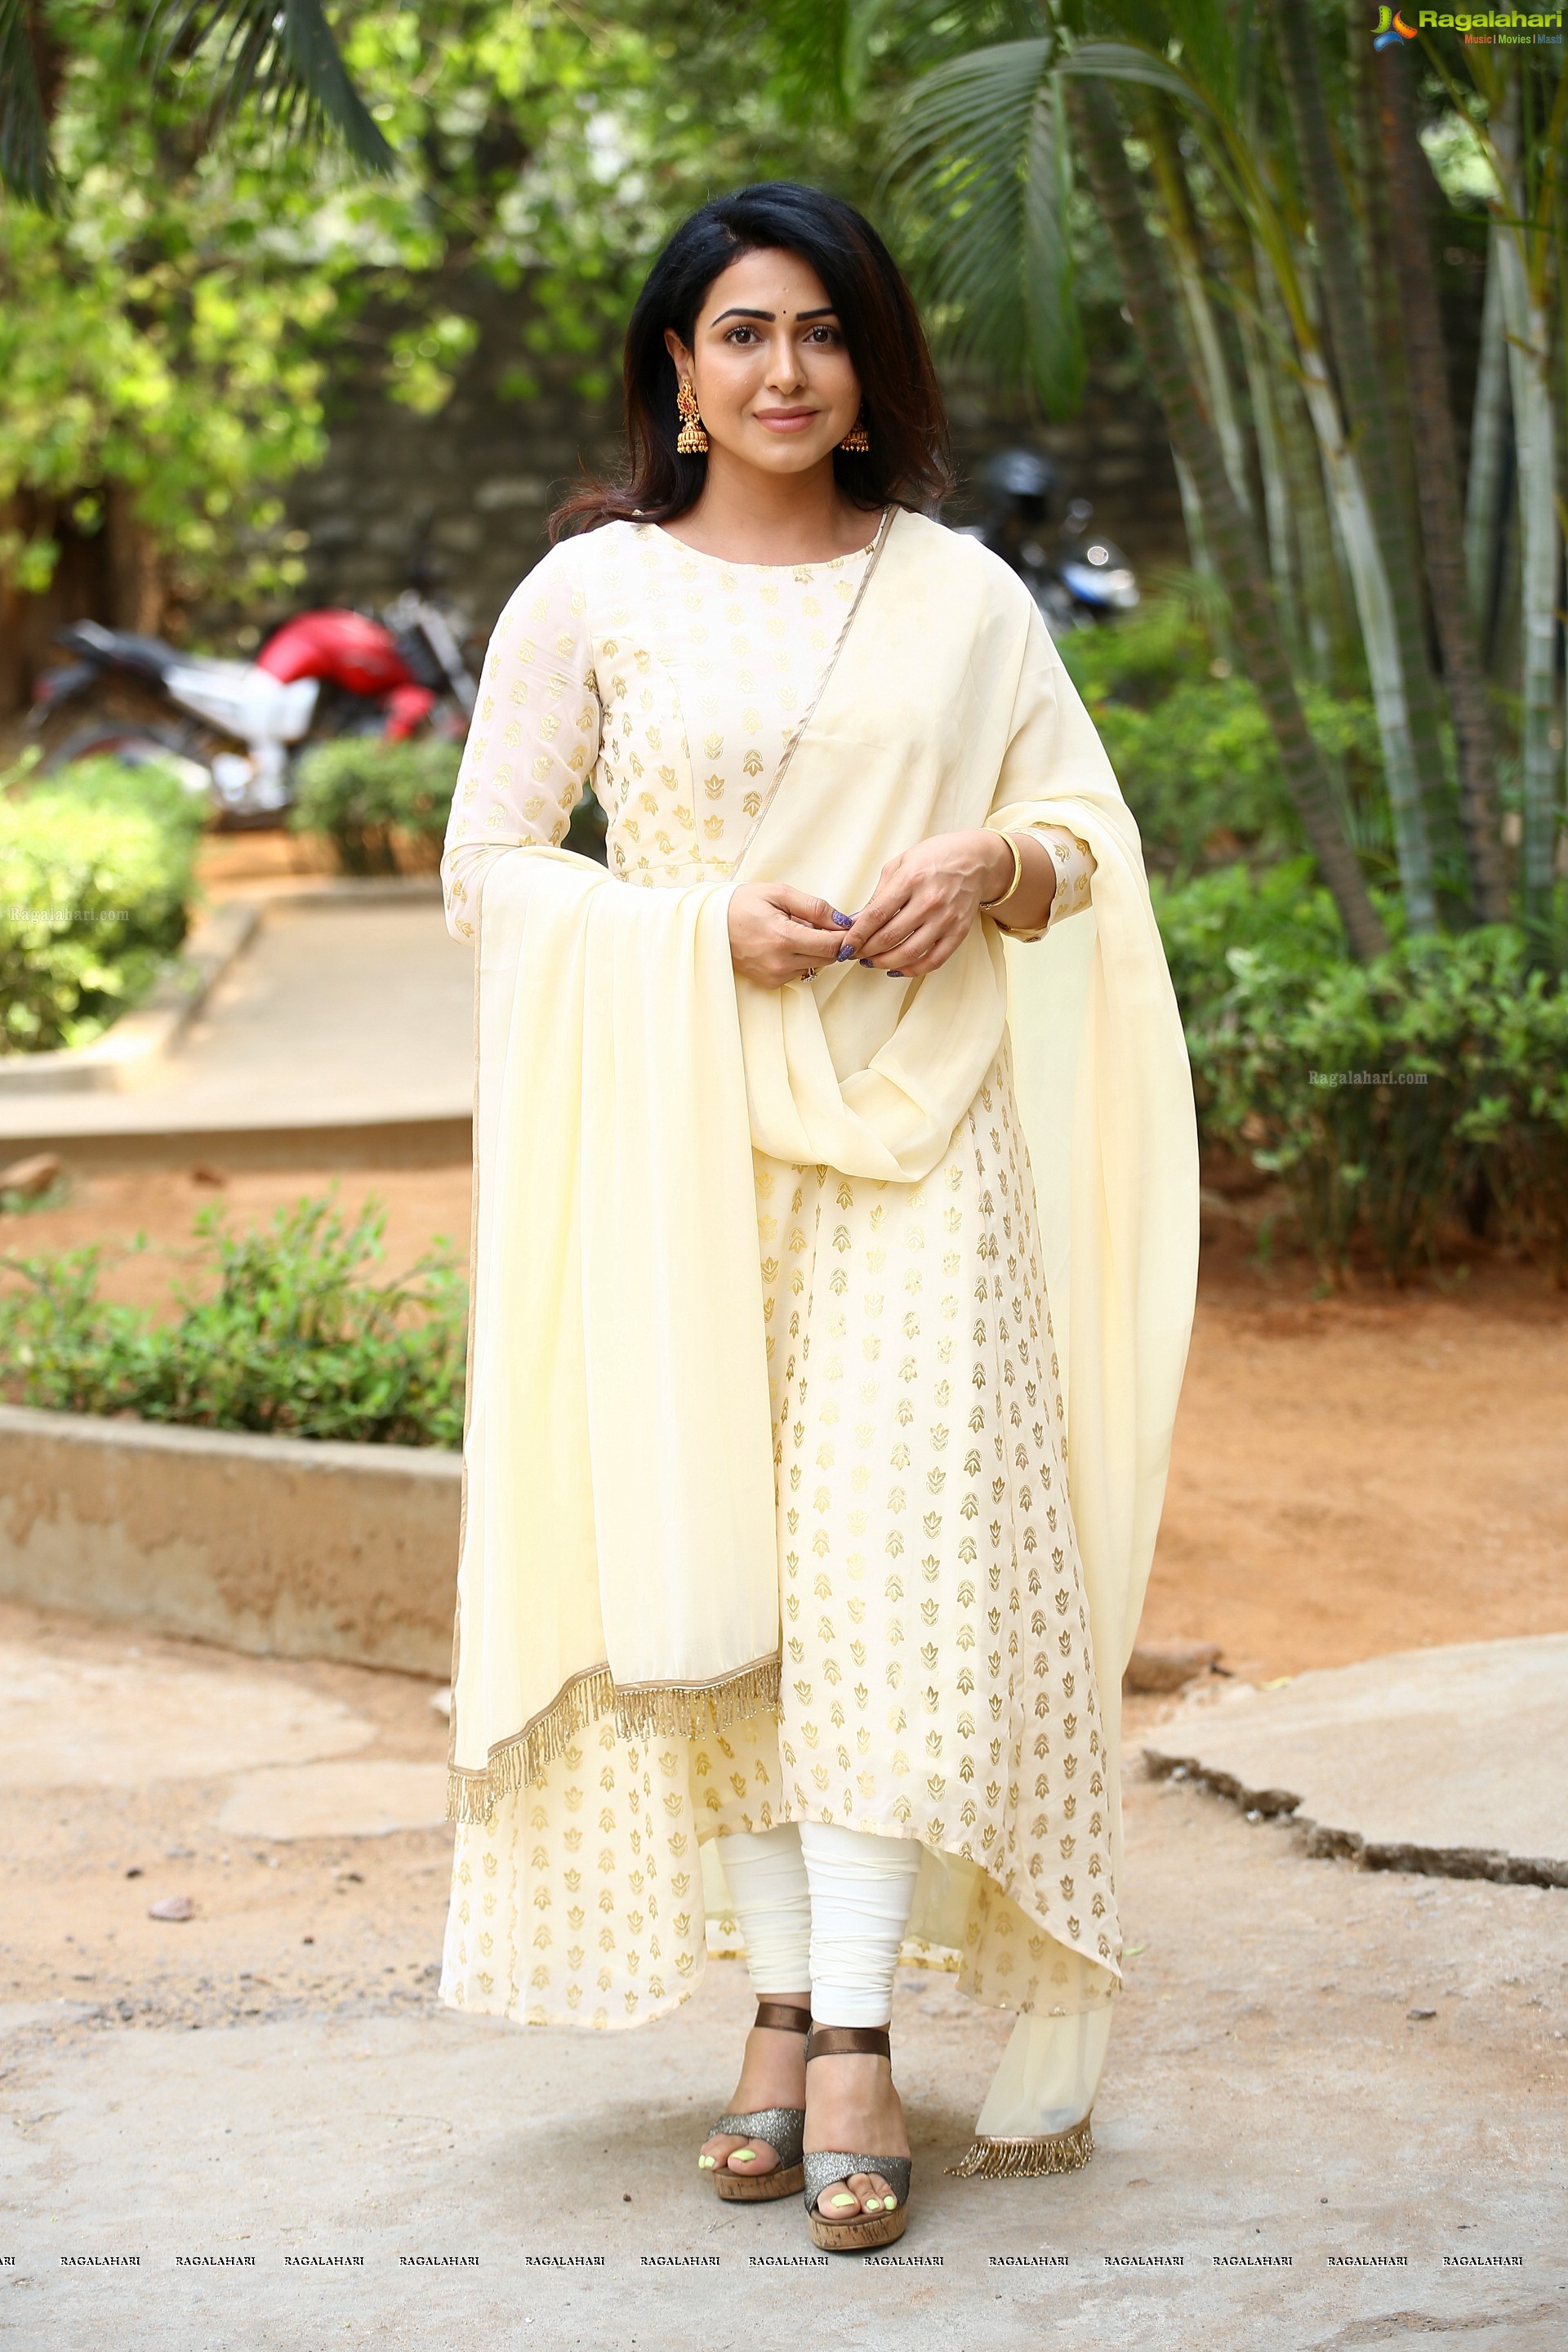 Nandini Rai at Gaalivaana Web Series 1st Episode Preview, HD Gallery